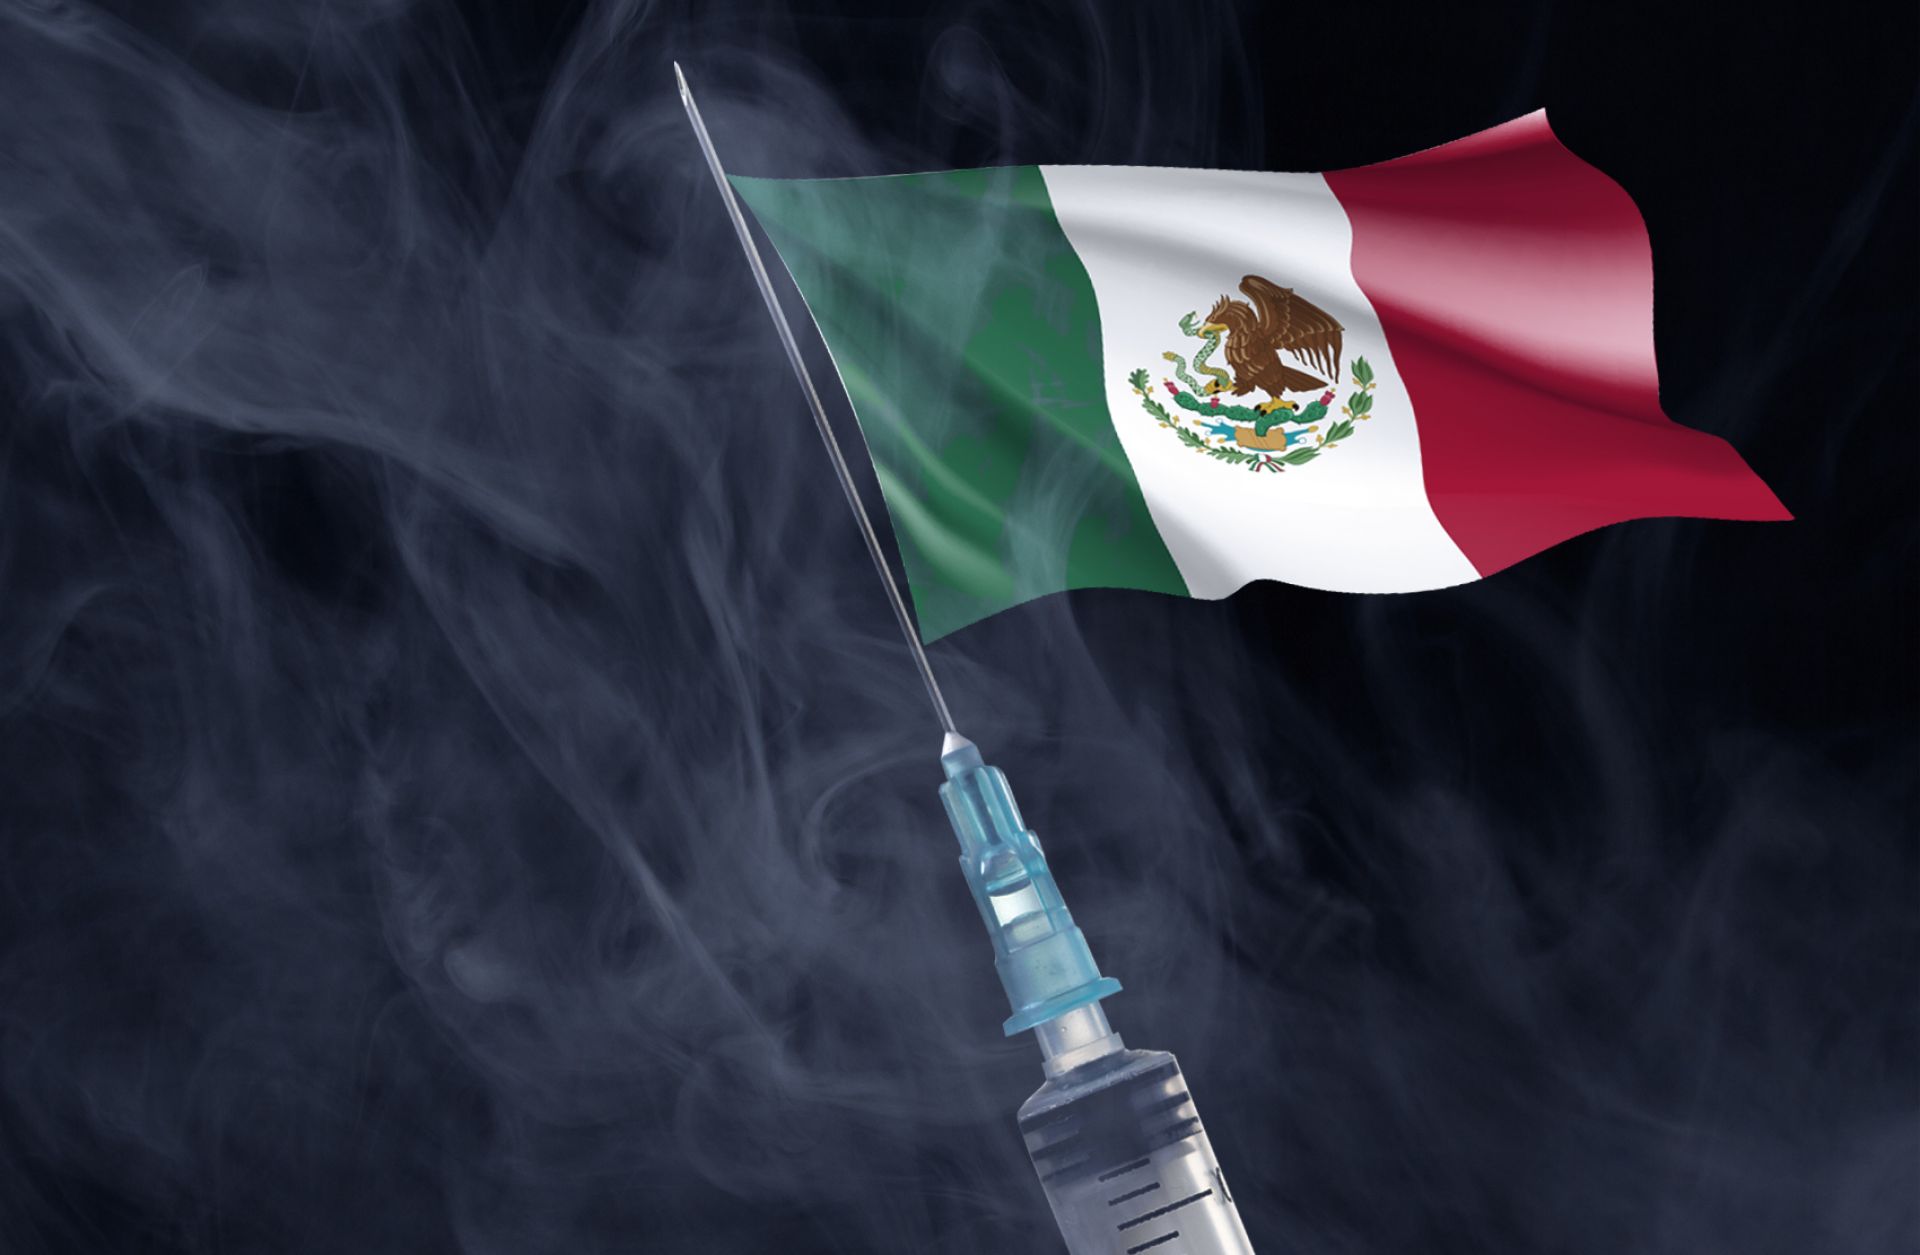 In the Tierra Caliente region, the Cartel de Jalisco Nueva Generacion is the most powerful criminal group.